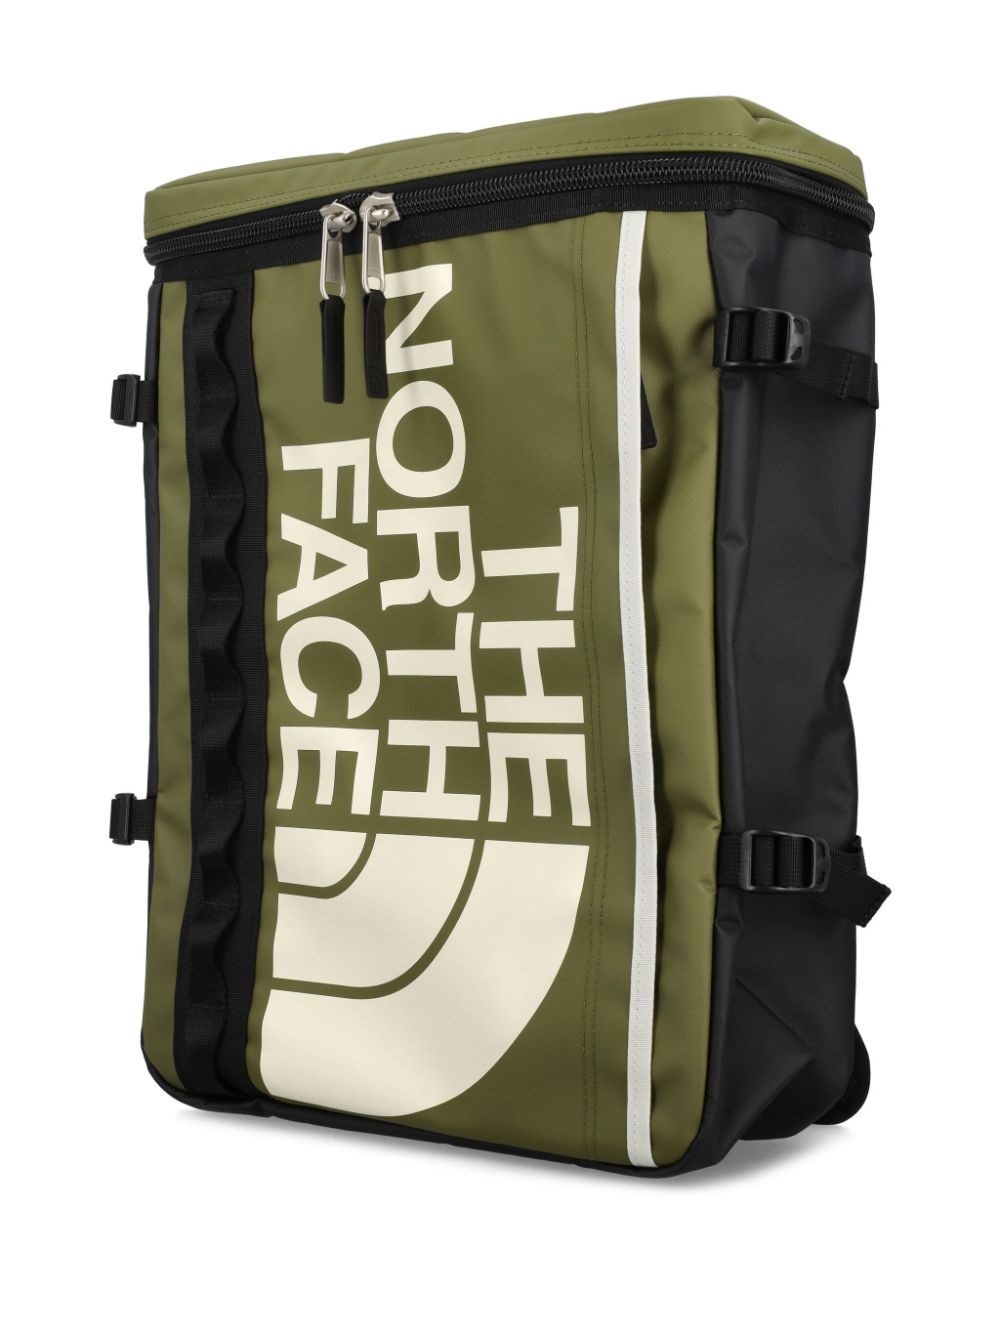 Base Camp Fuse Box backpack - 4